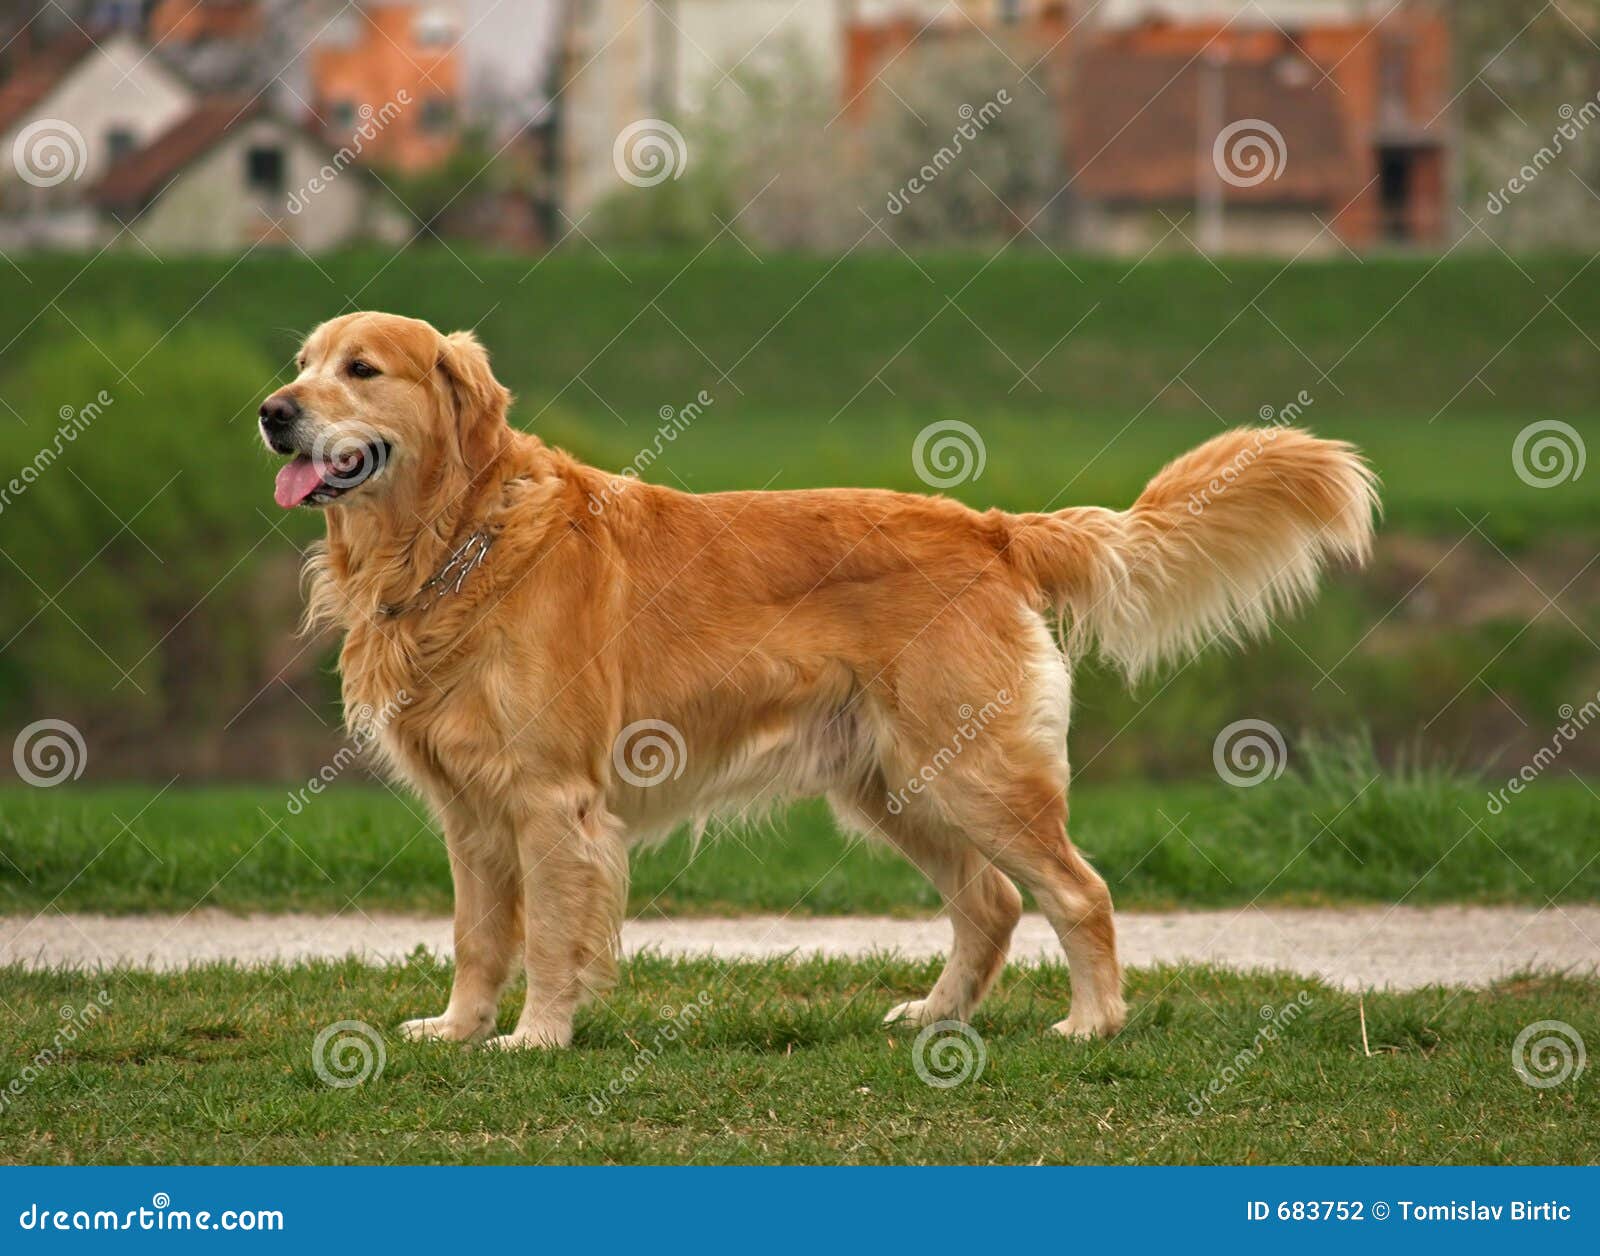 Get training a golden retriever puppy not to bite